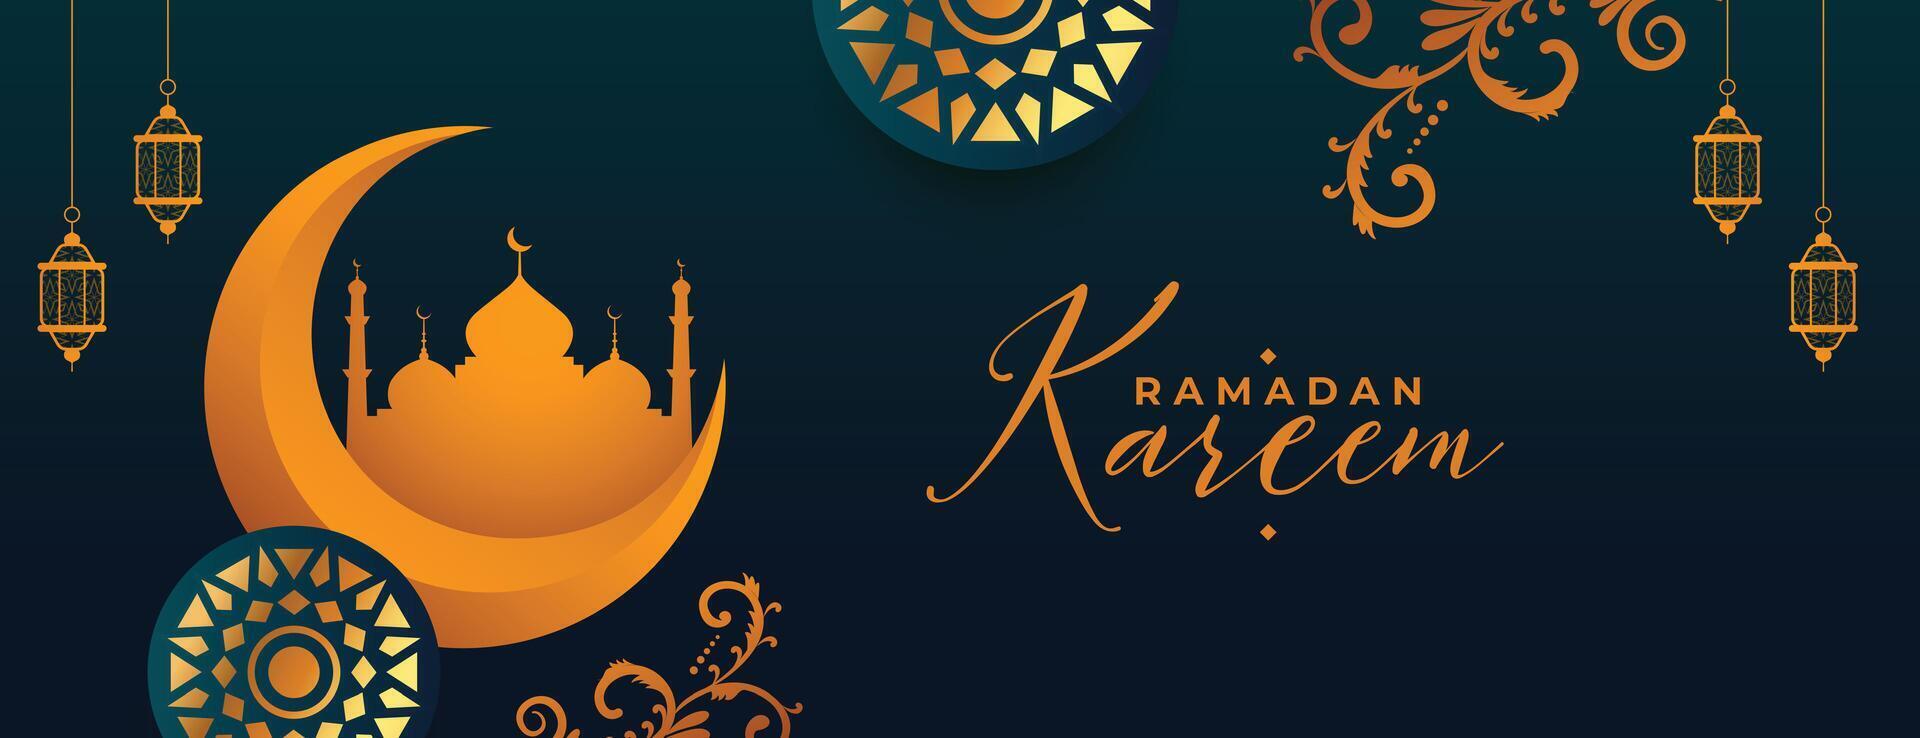 islamisch Ramadan kareem dekorativ Banner zum eid Festival vektor